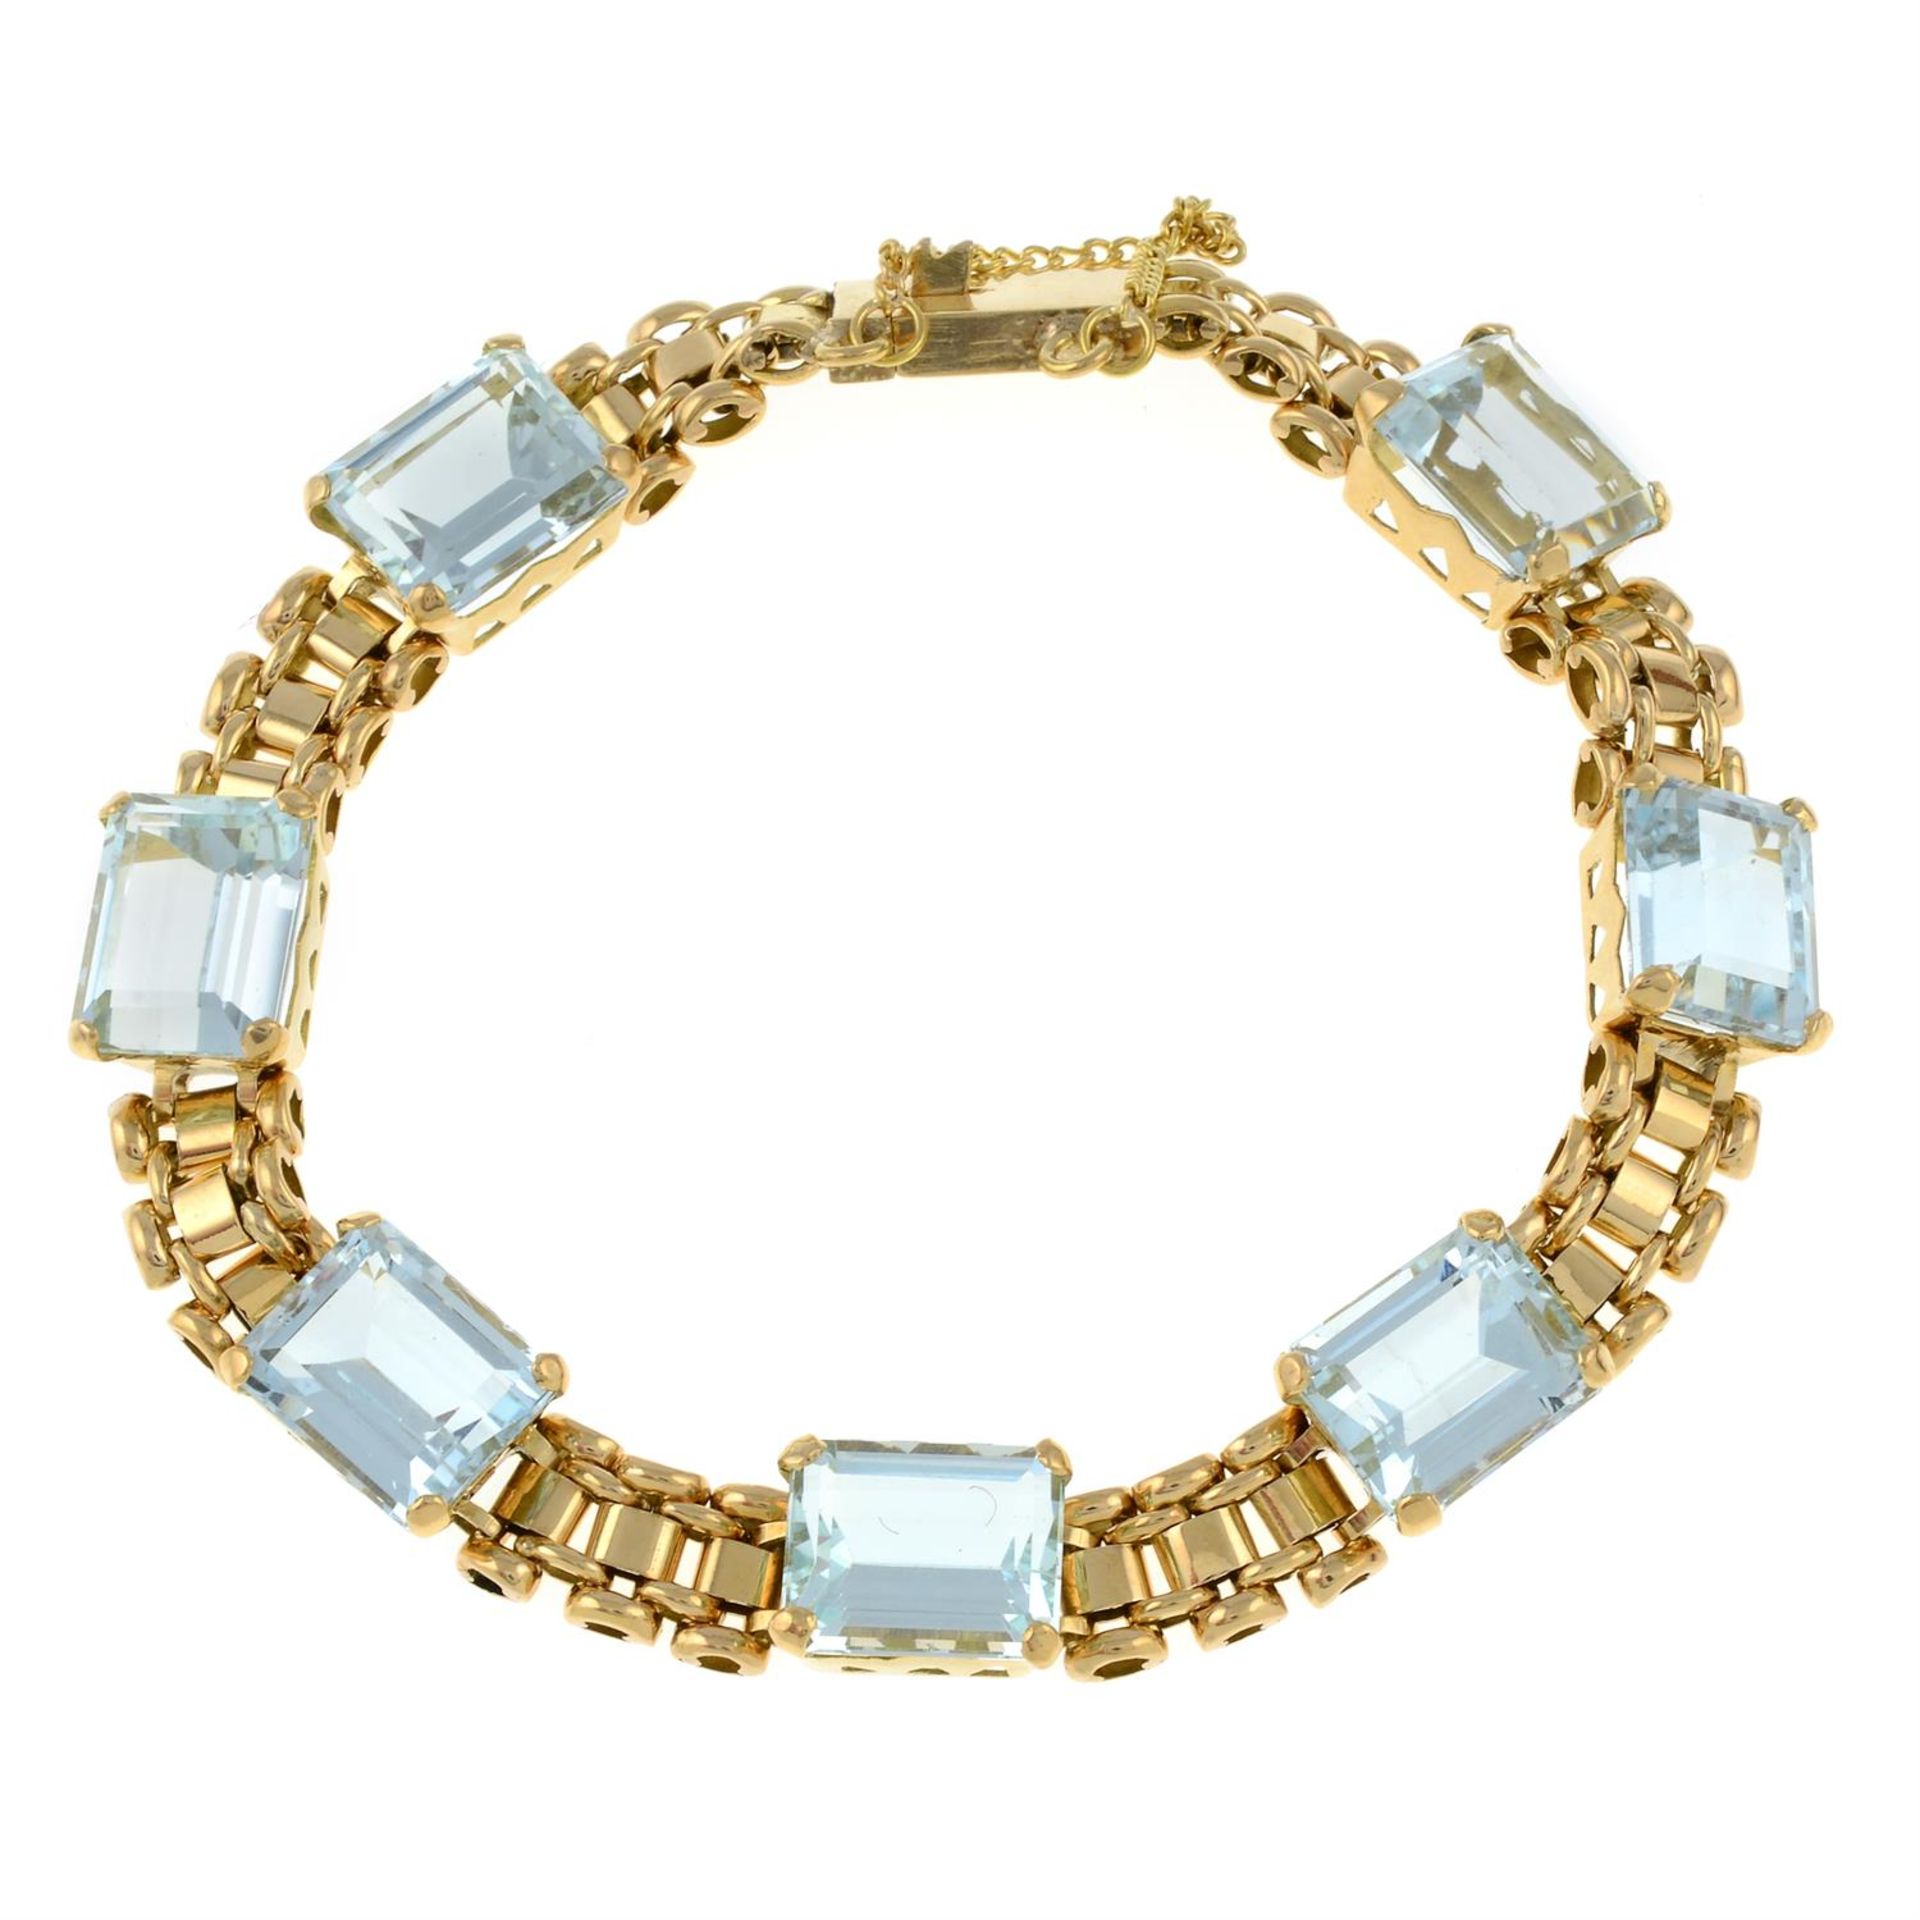 An aquamarine bracelet.